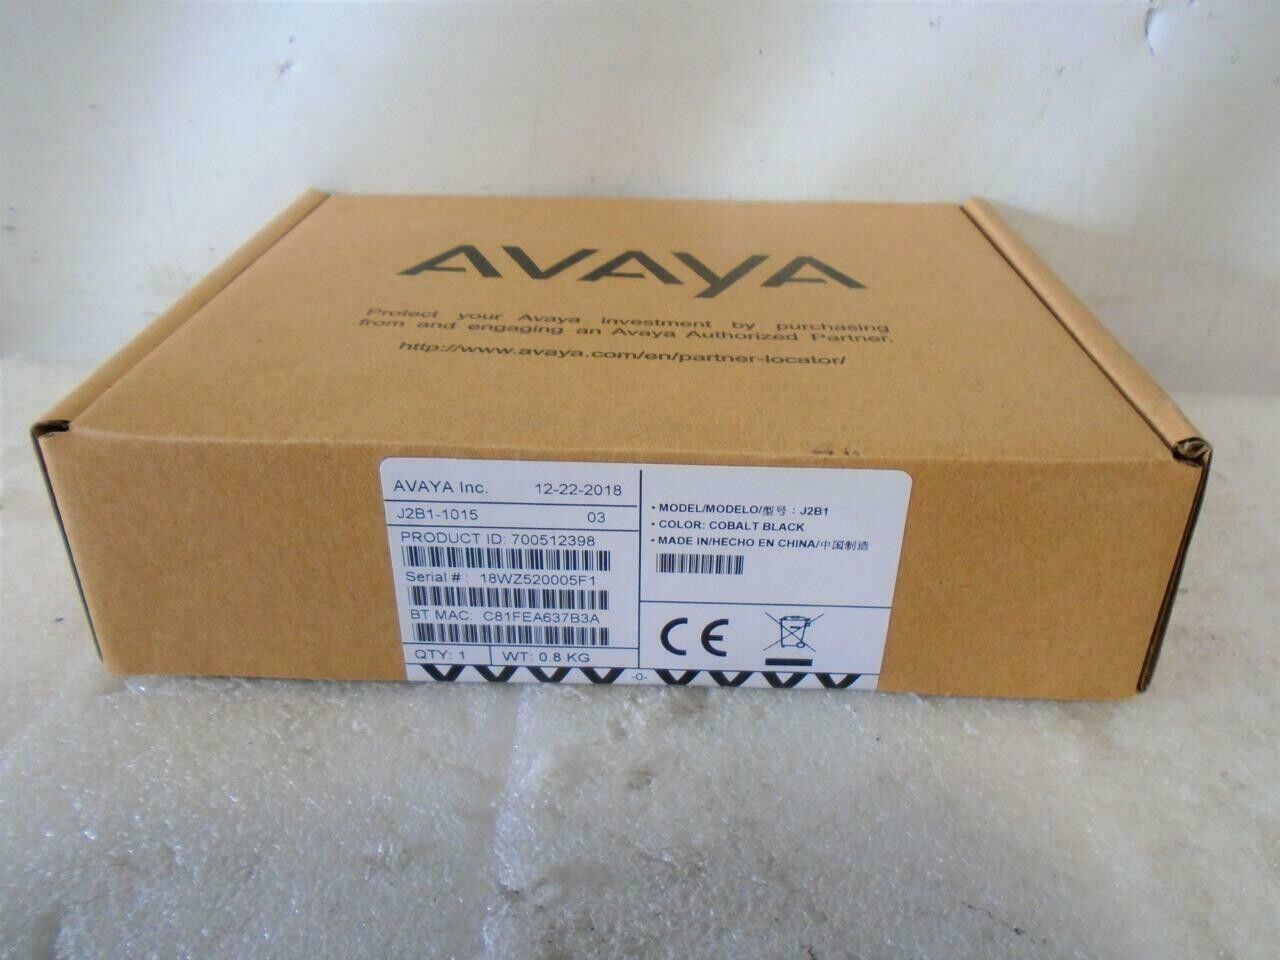 *New* Avaya Vantage J2B1 Wireless Handset Kit 700512398 Black